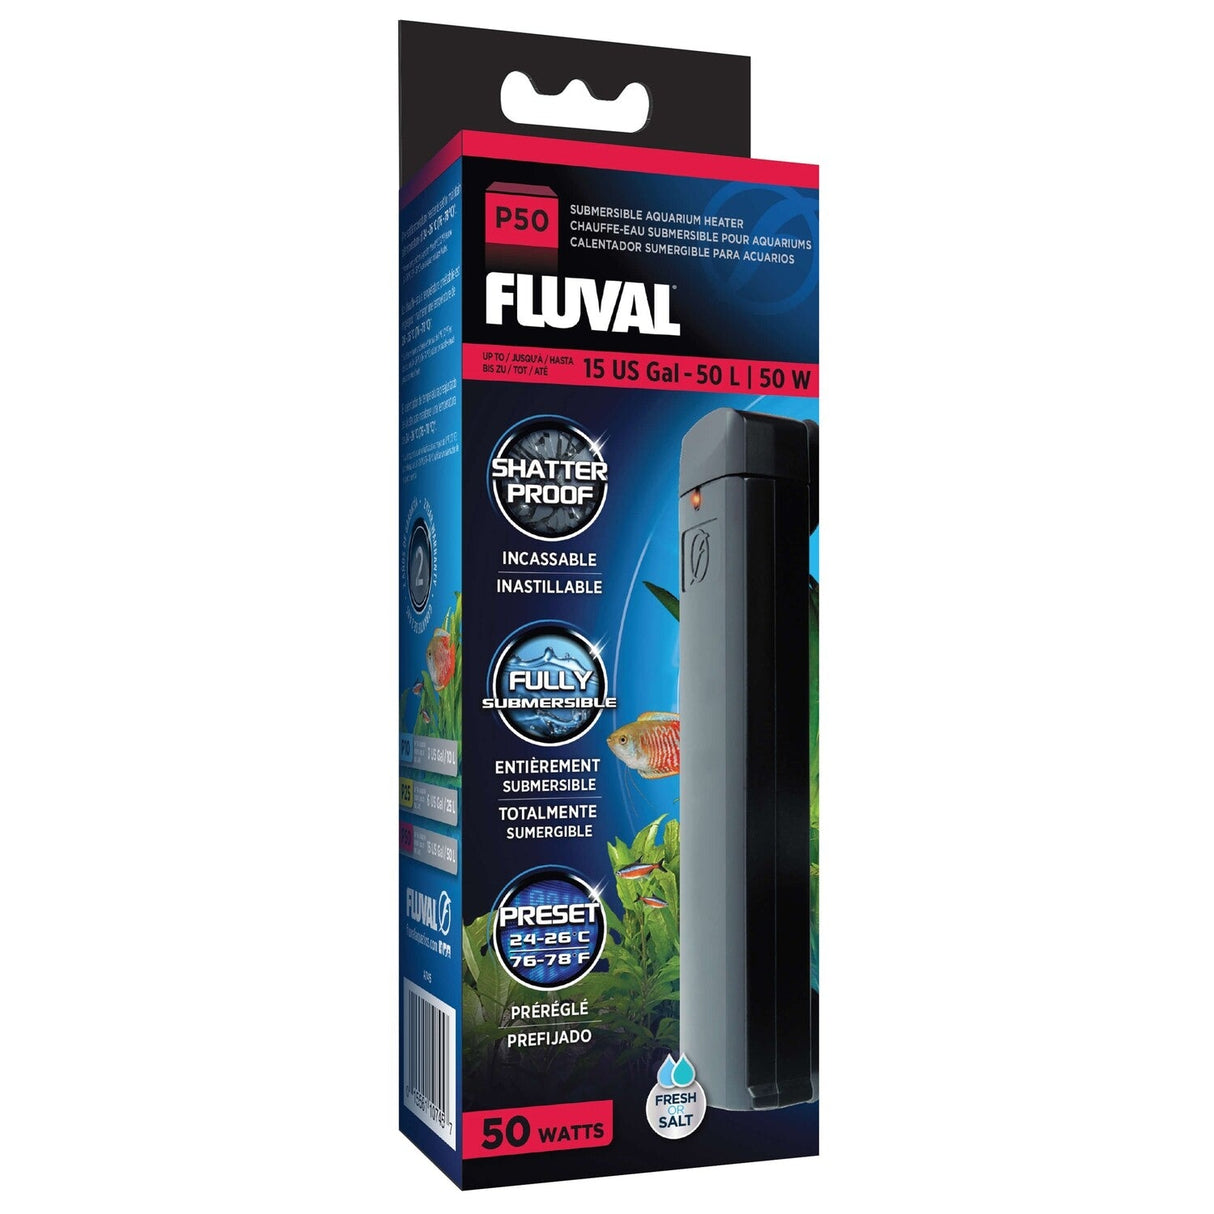 FLUVAL P50 Pre-Set Aquarium Heater 50w A745